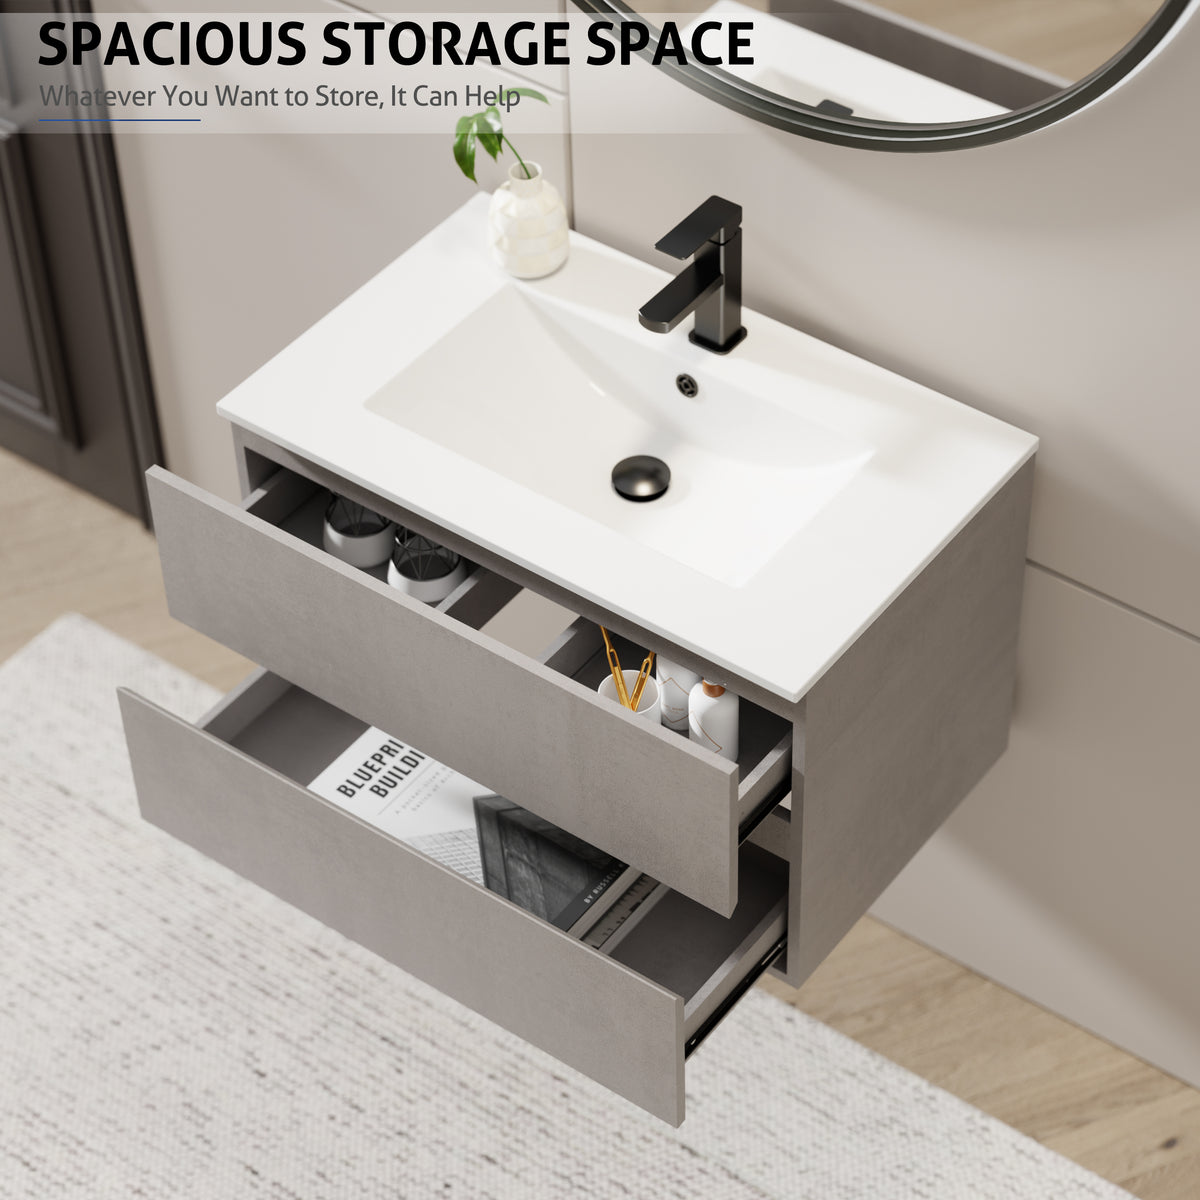 24" Wall Mounted Bathroom Vanity Combo with Single Undermount Sink —Cement Grey